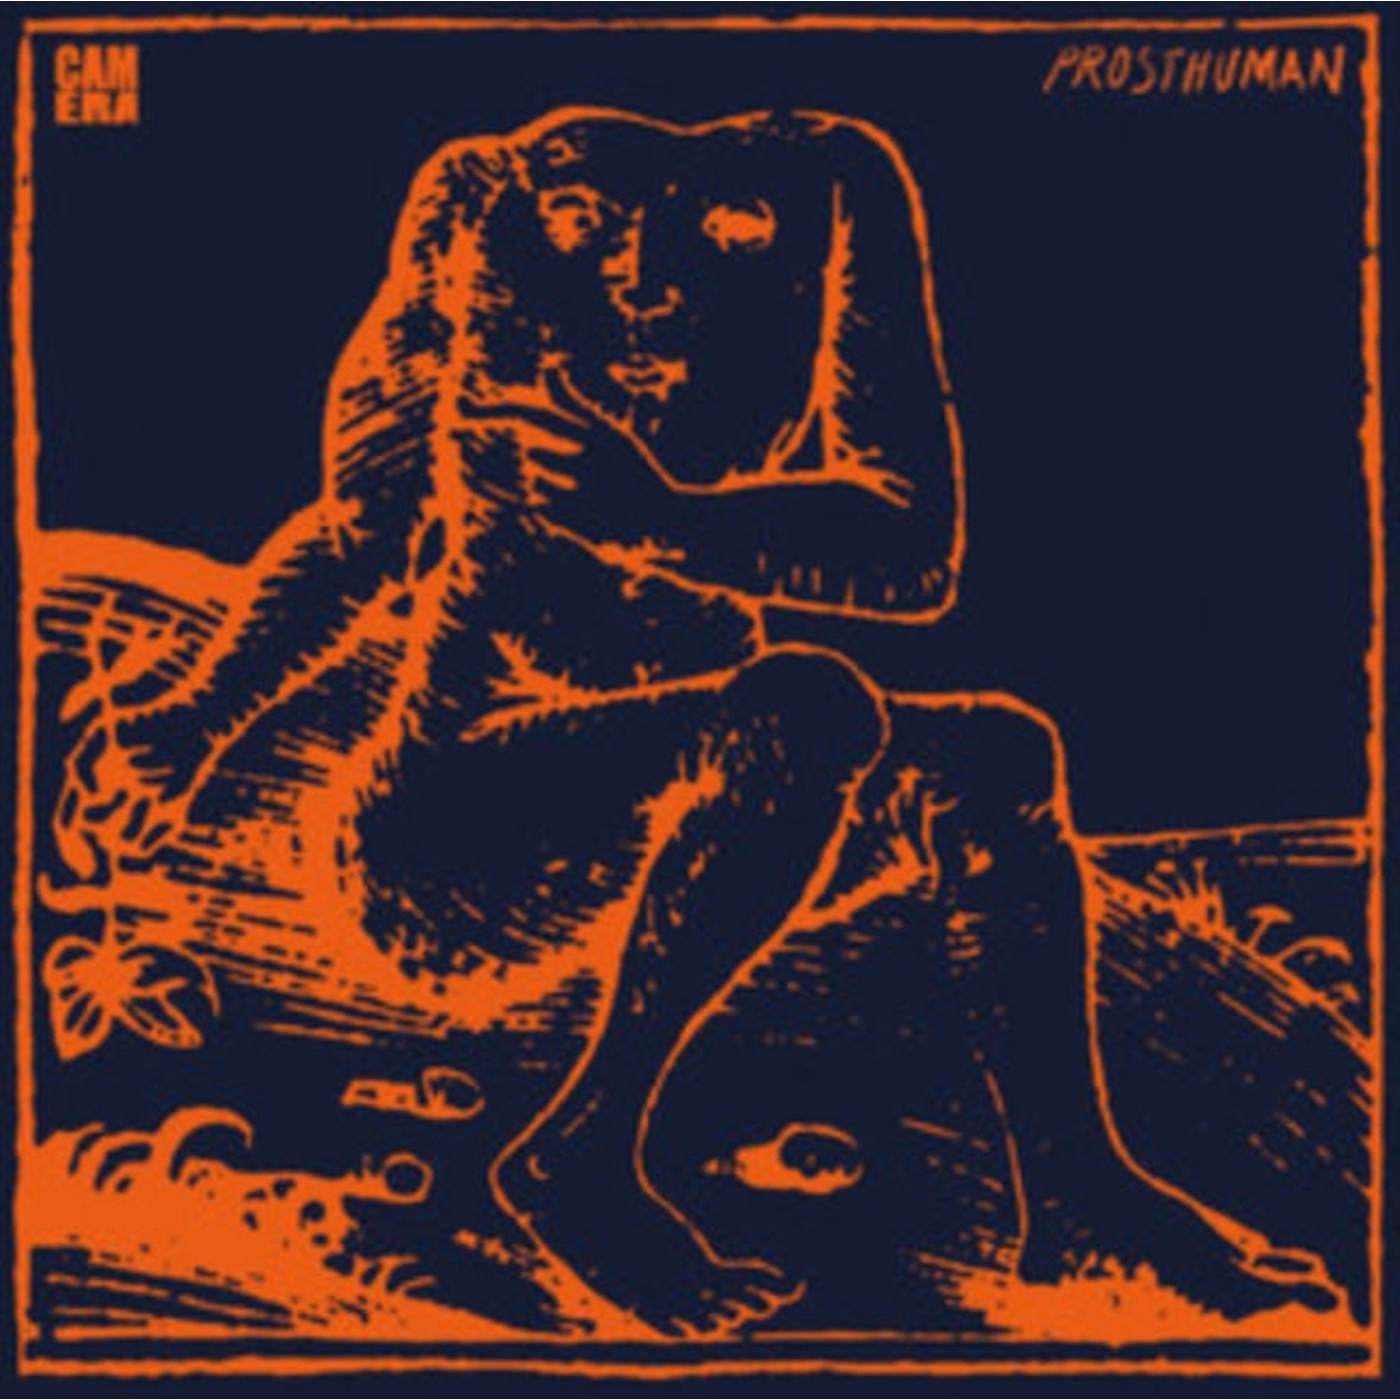 Camera LP - Prosthuman (Vinyl)